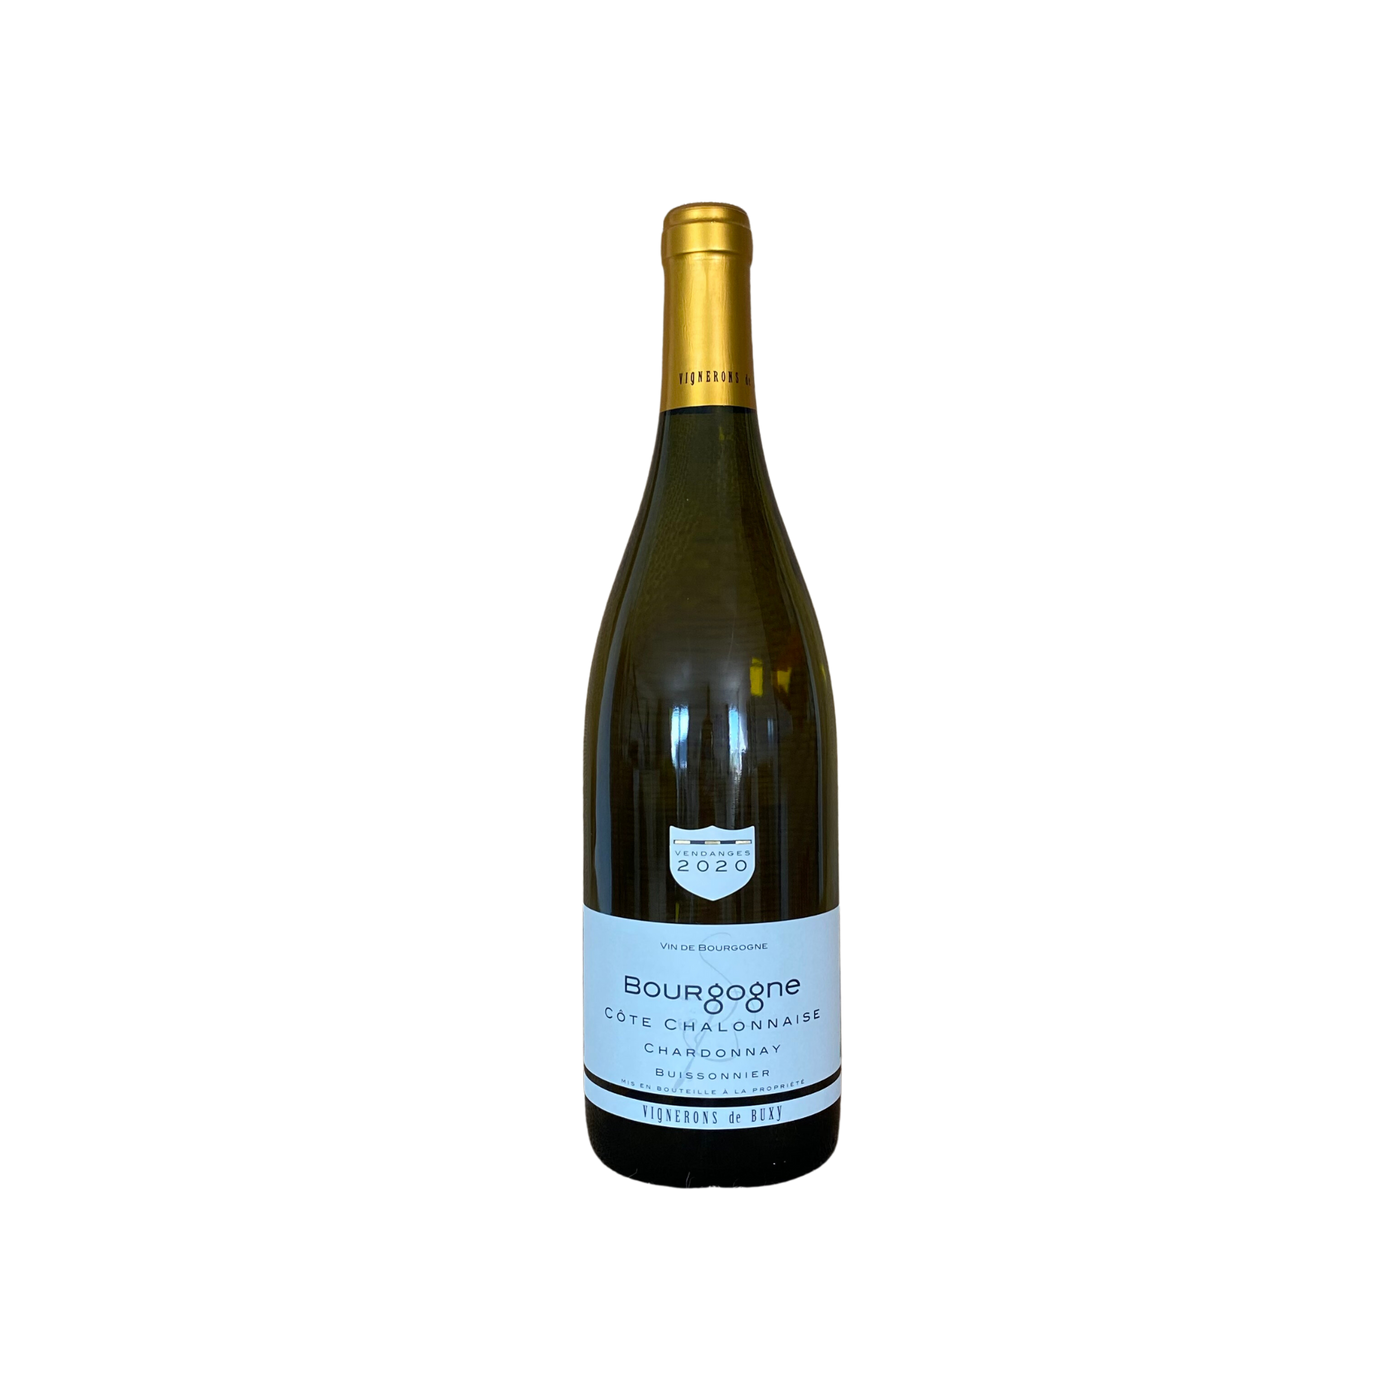 Bourgogne Côtes Chalonnaise Chardonnay